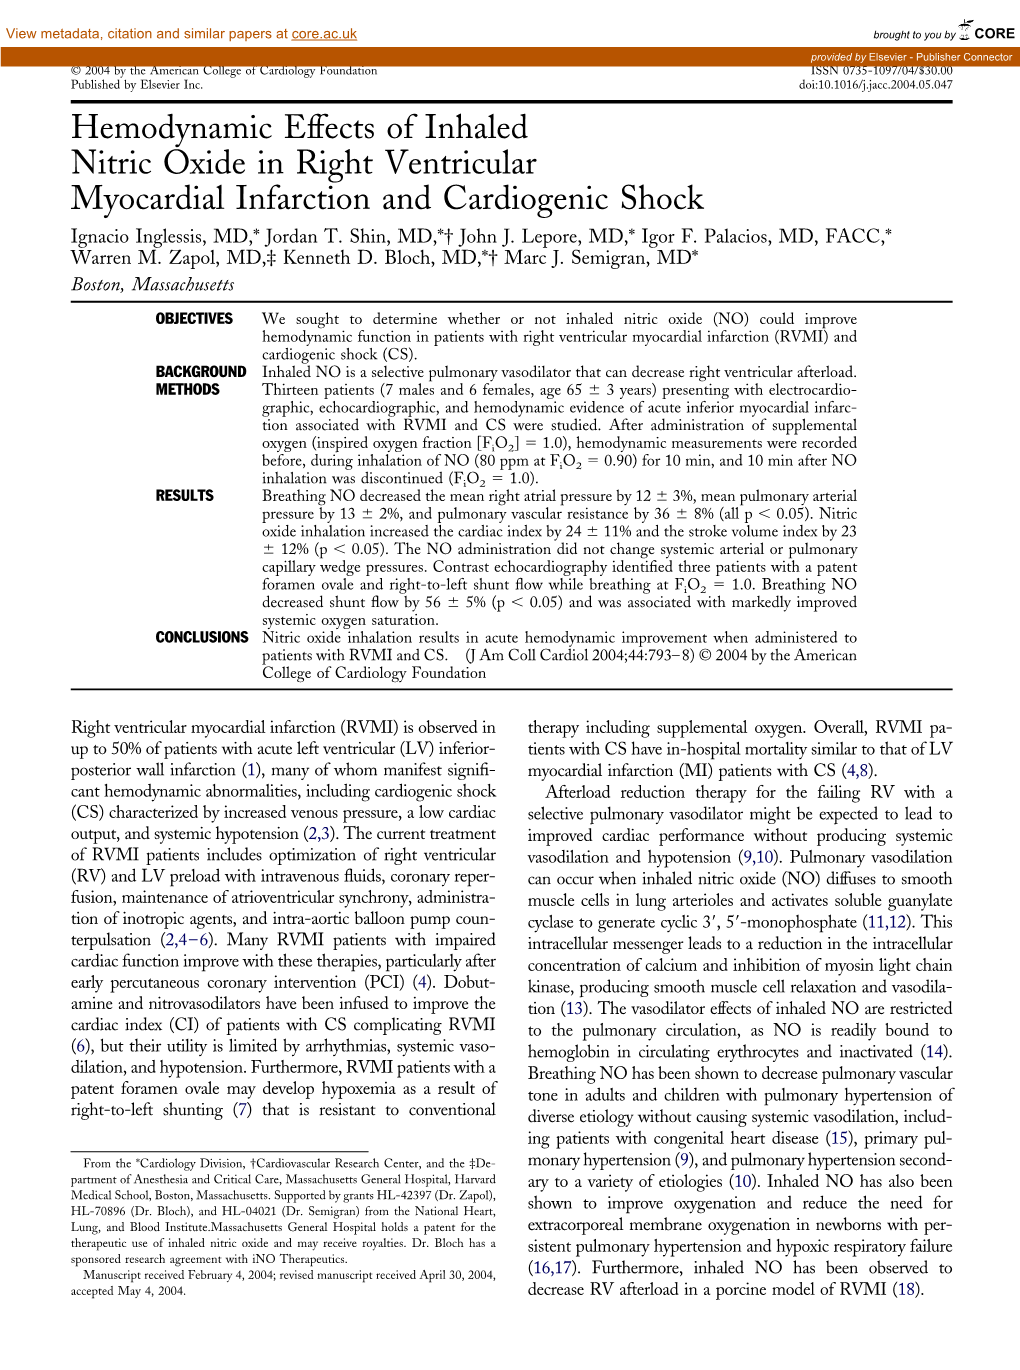 Hemodynamic Effects of Inhaled Nitric Oxide in Right Ventricular Myocardial Infarction and Cardiogenic Shock Ignacio Inglessis, MD,* Jordan T